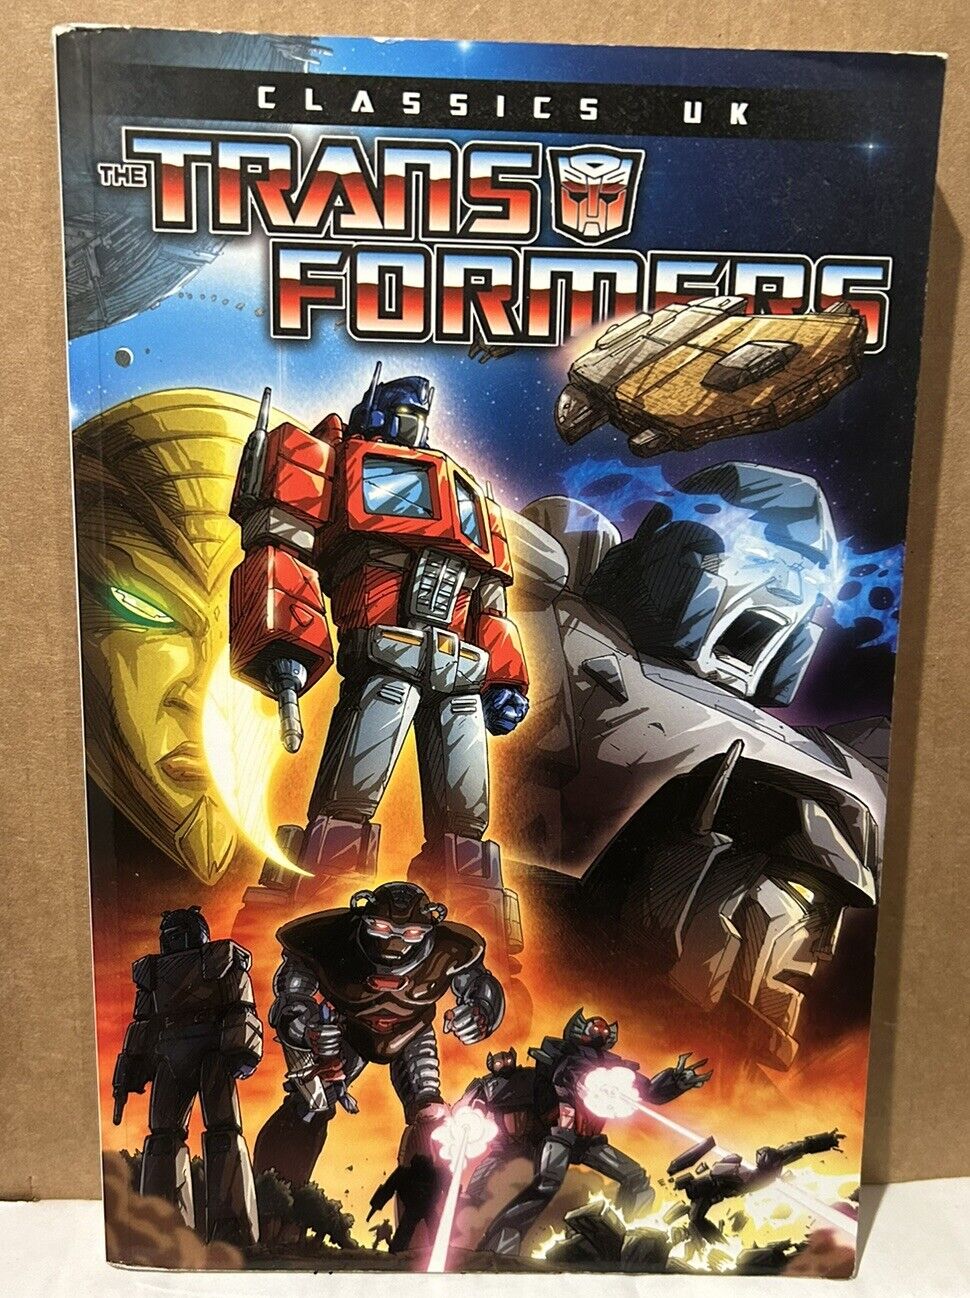 The Transformers Classics Uk #1 (IDW Publishing August 2011)